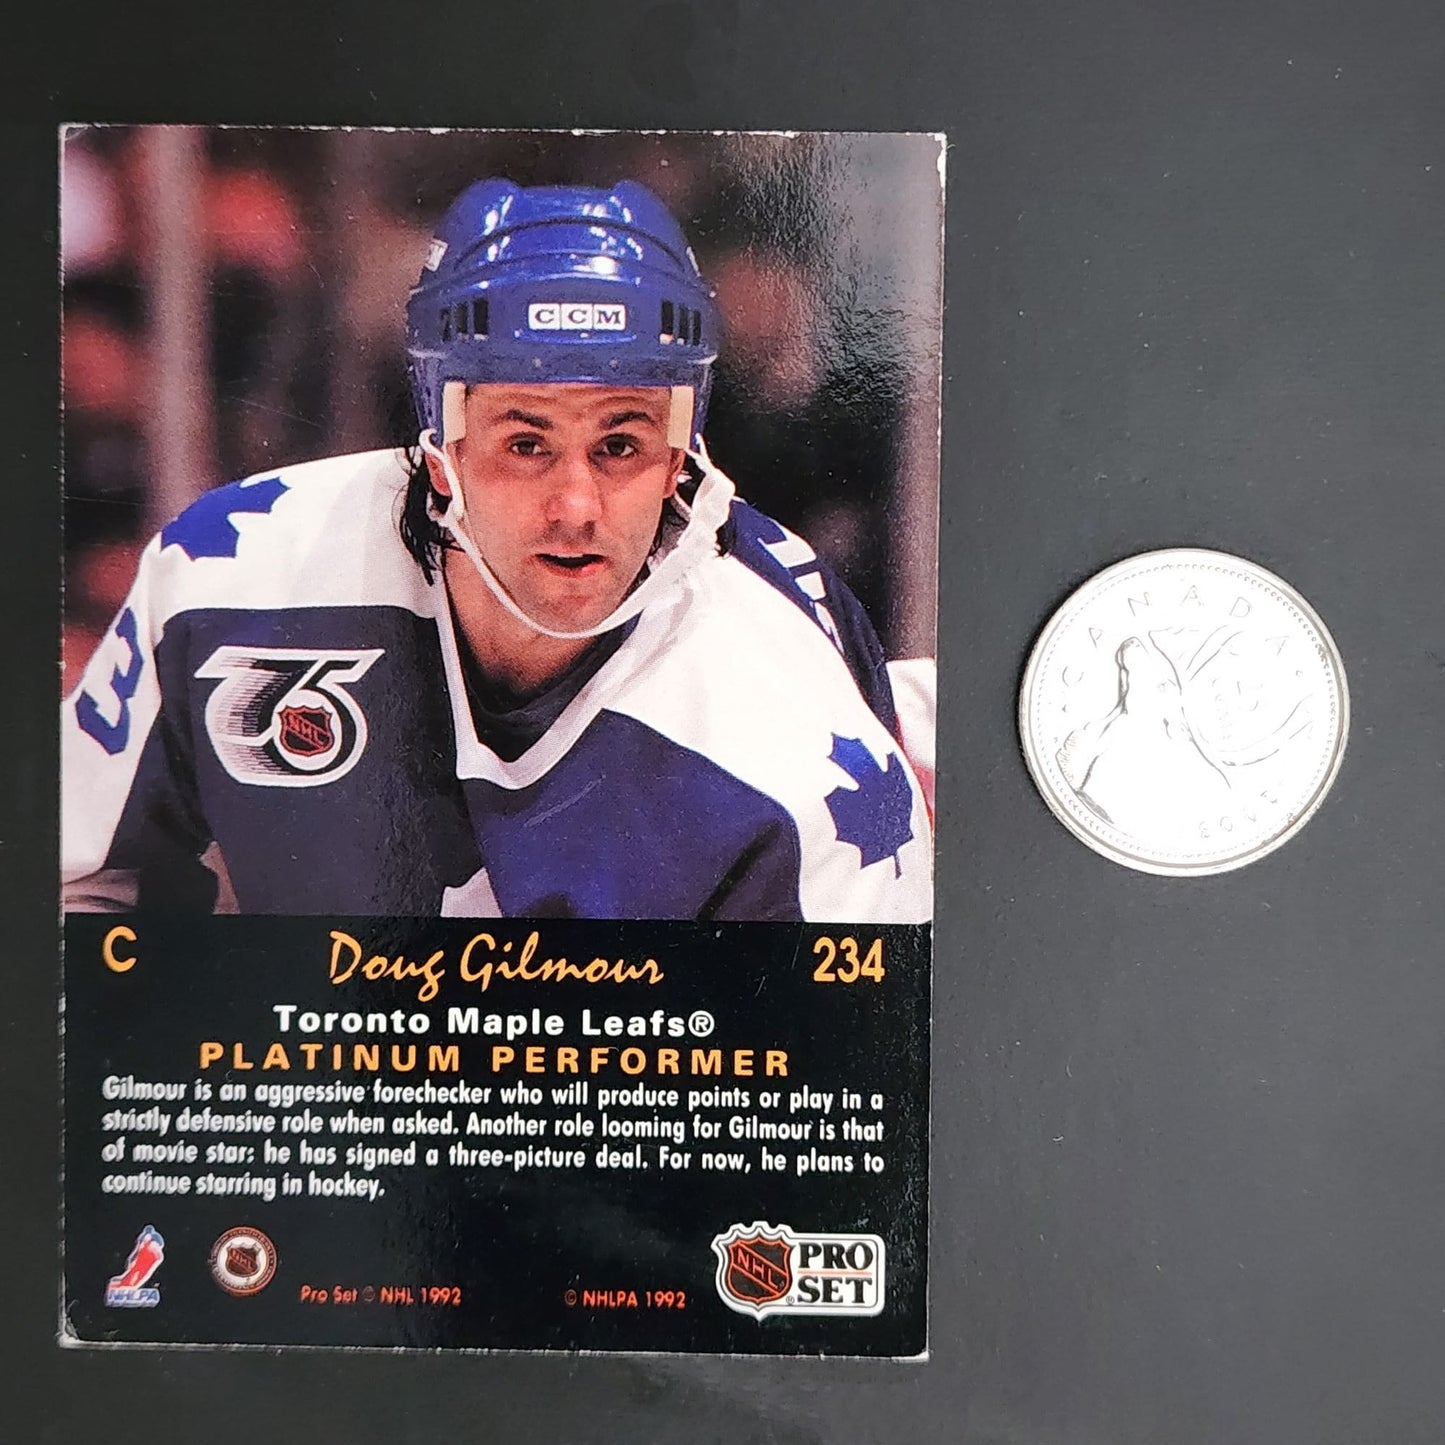 Doug Gilmour hockey card - A trading card featuring Doug Gilmour, a professional hockey player.